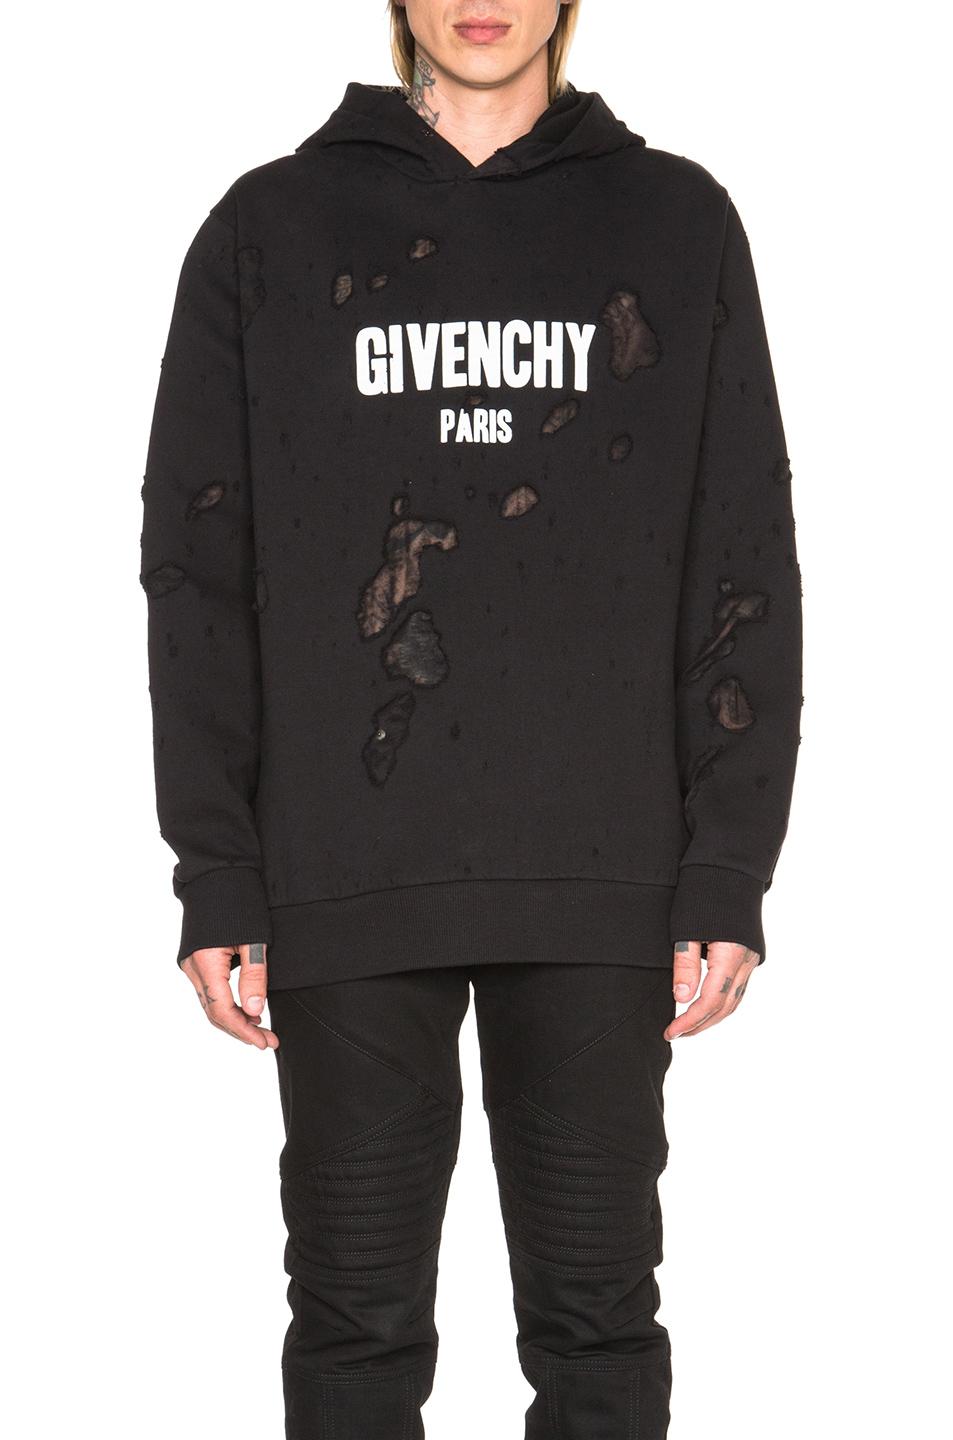 givenchy paris hoodie black